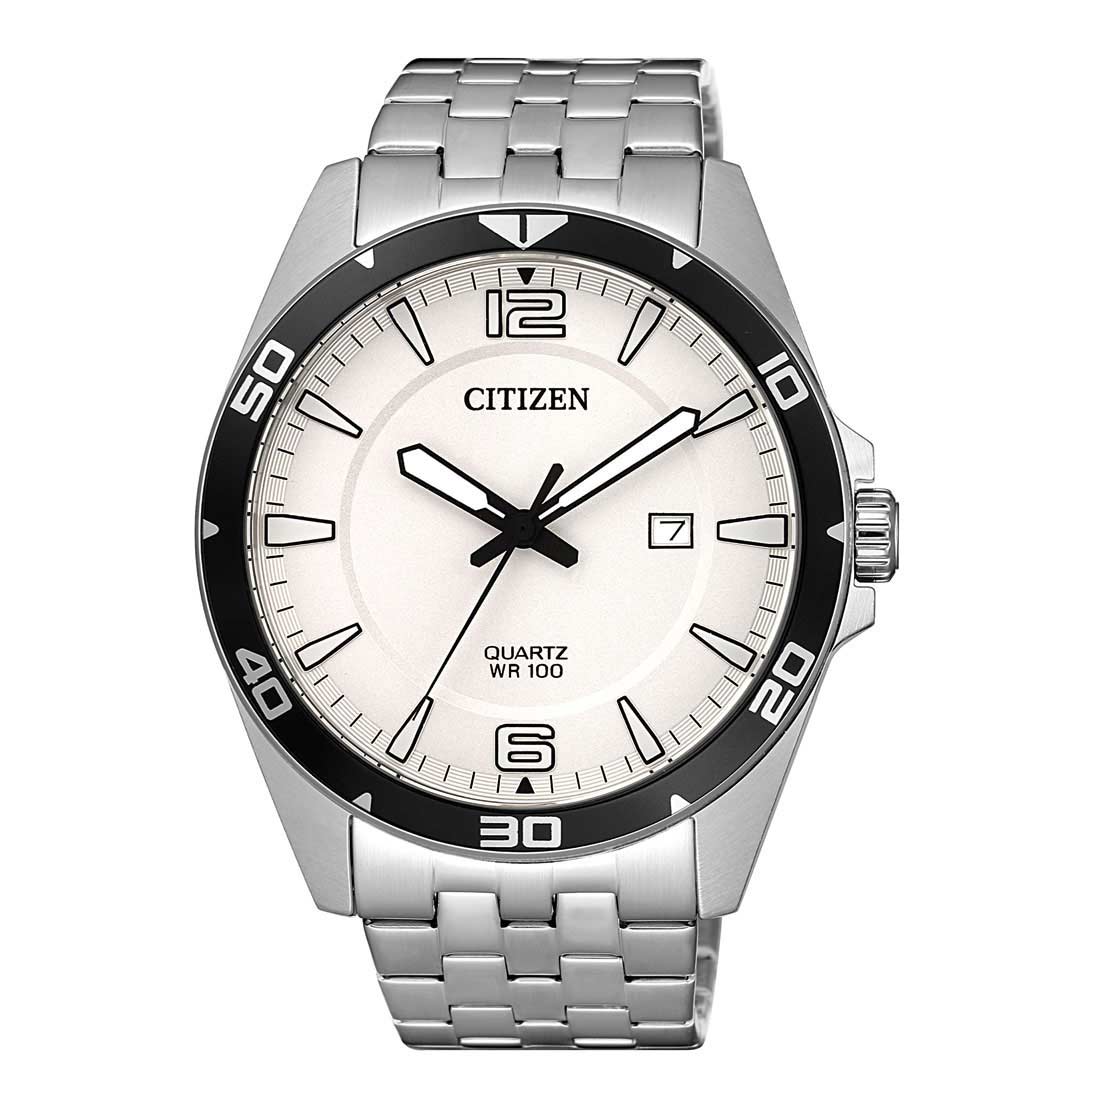 Citizen Men's Quartz Watch, White Dial - BI5051-51A